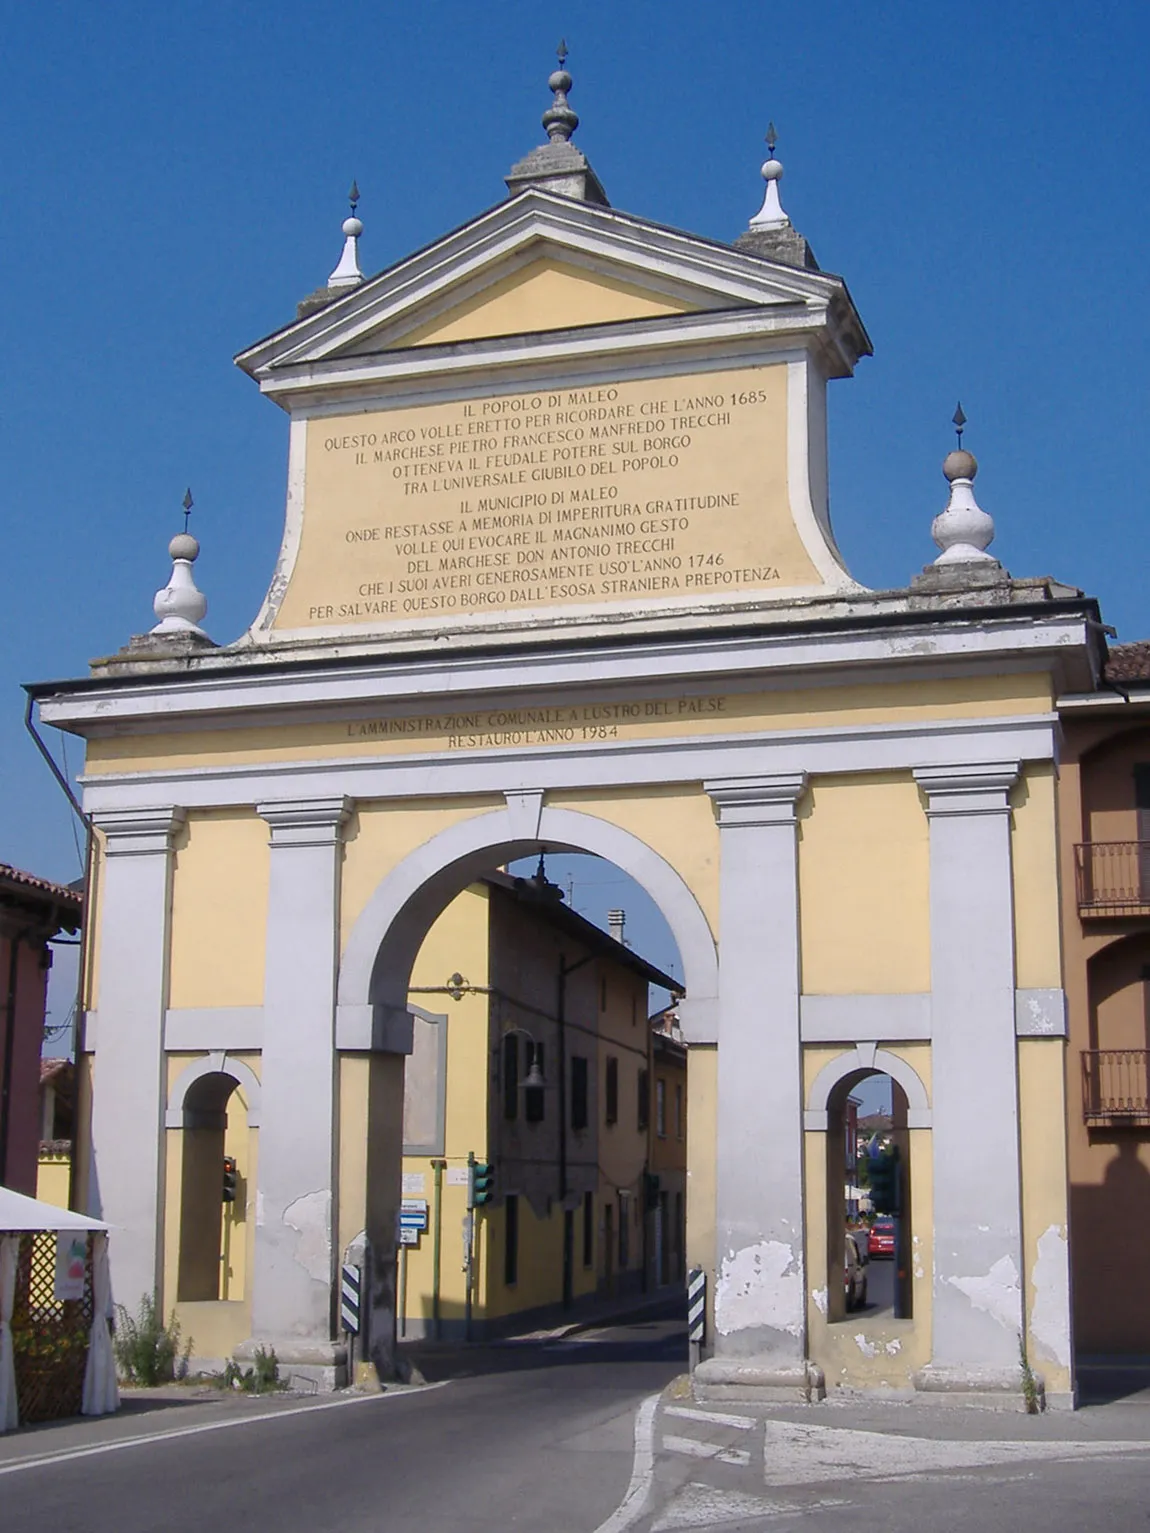 Photo showing: The Trecchi Arch in Maleo, Italy